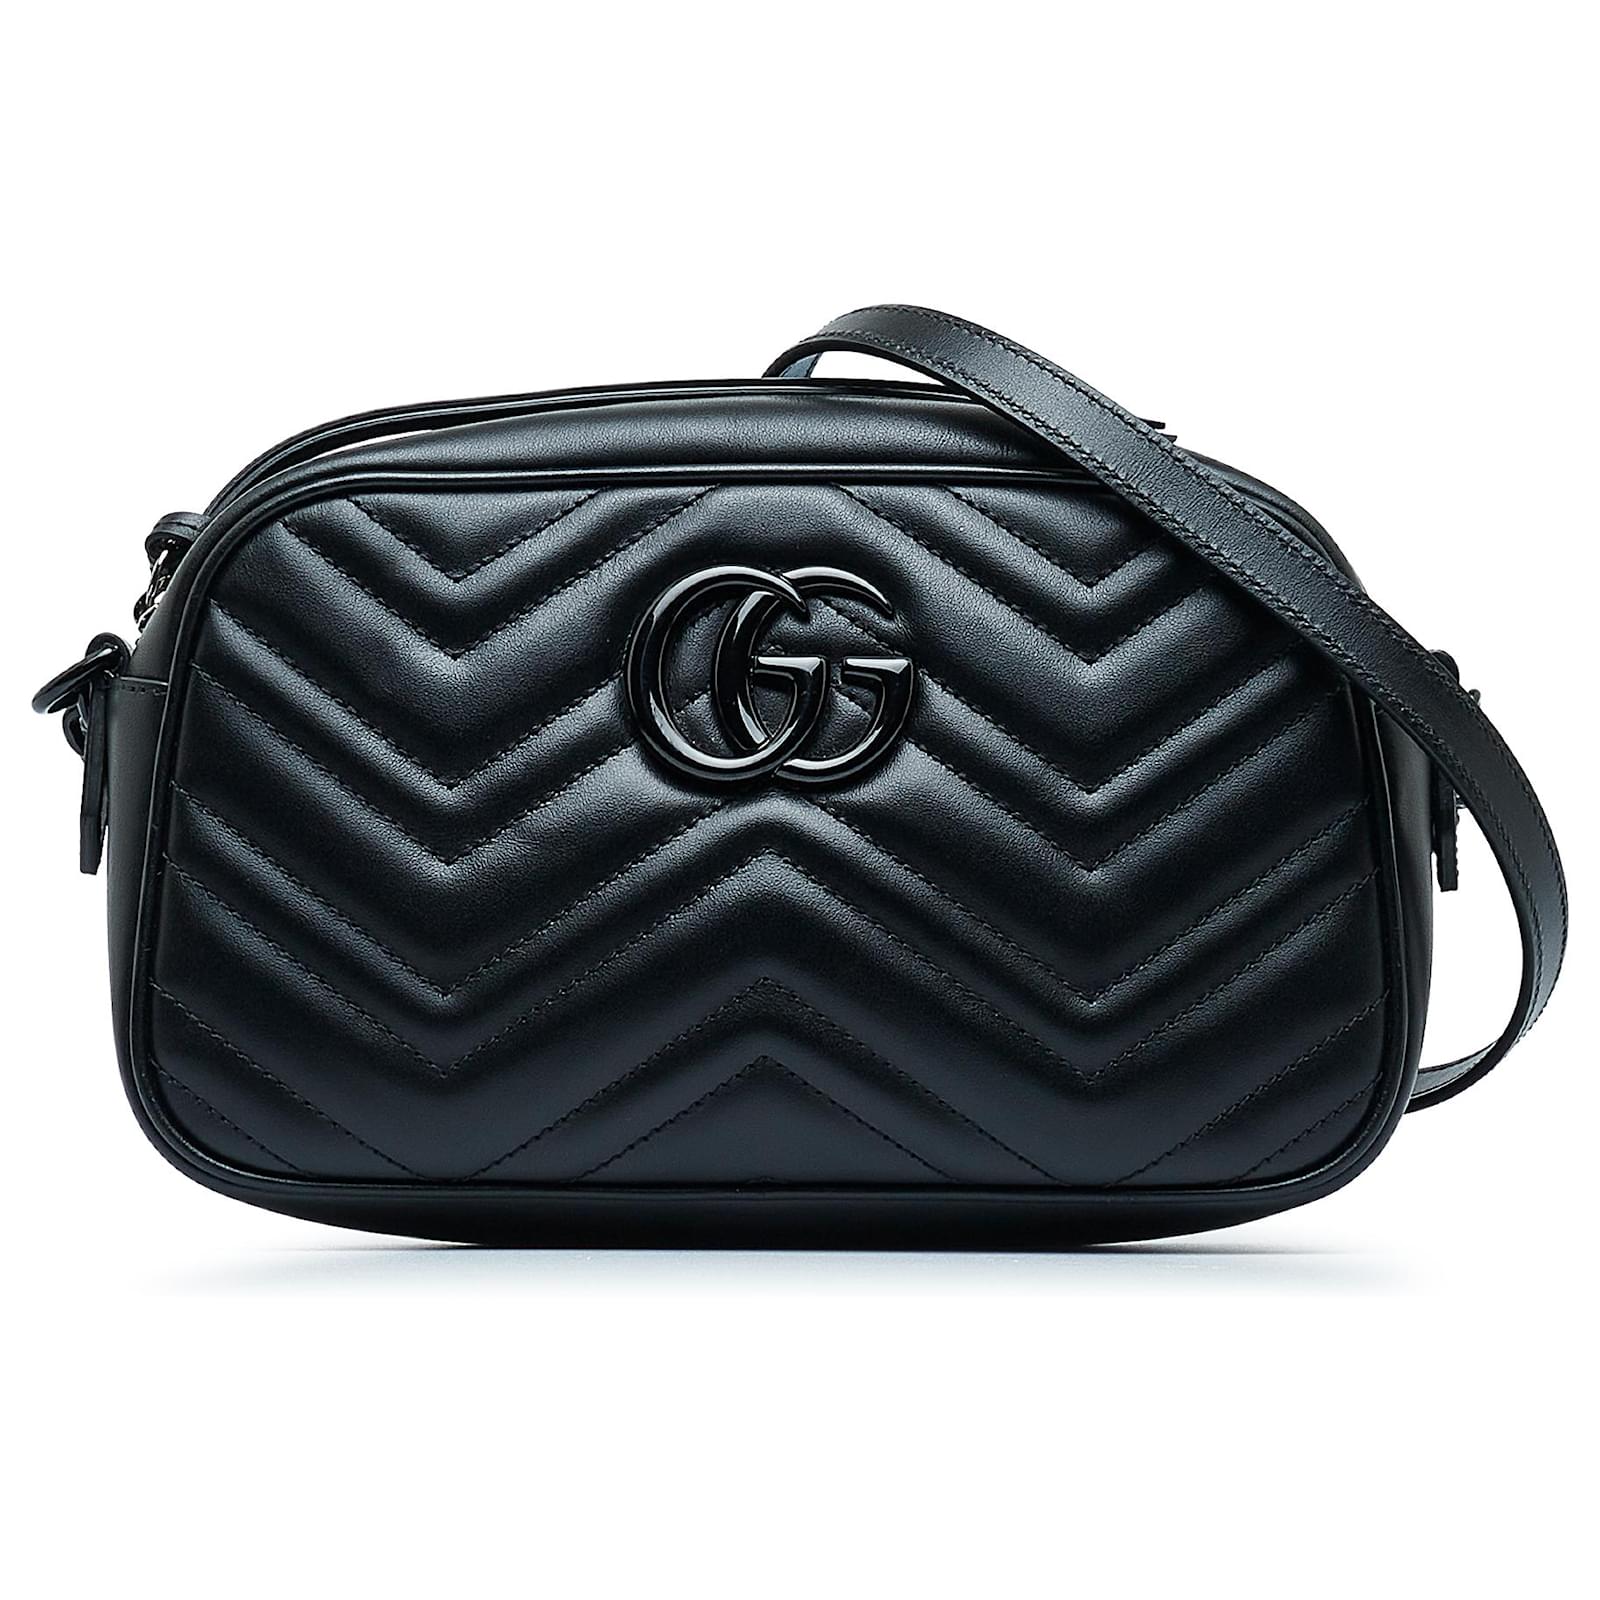 Gucci GG Marmont small Black top handle bag | Burberry bag, Gucci bag, Bags